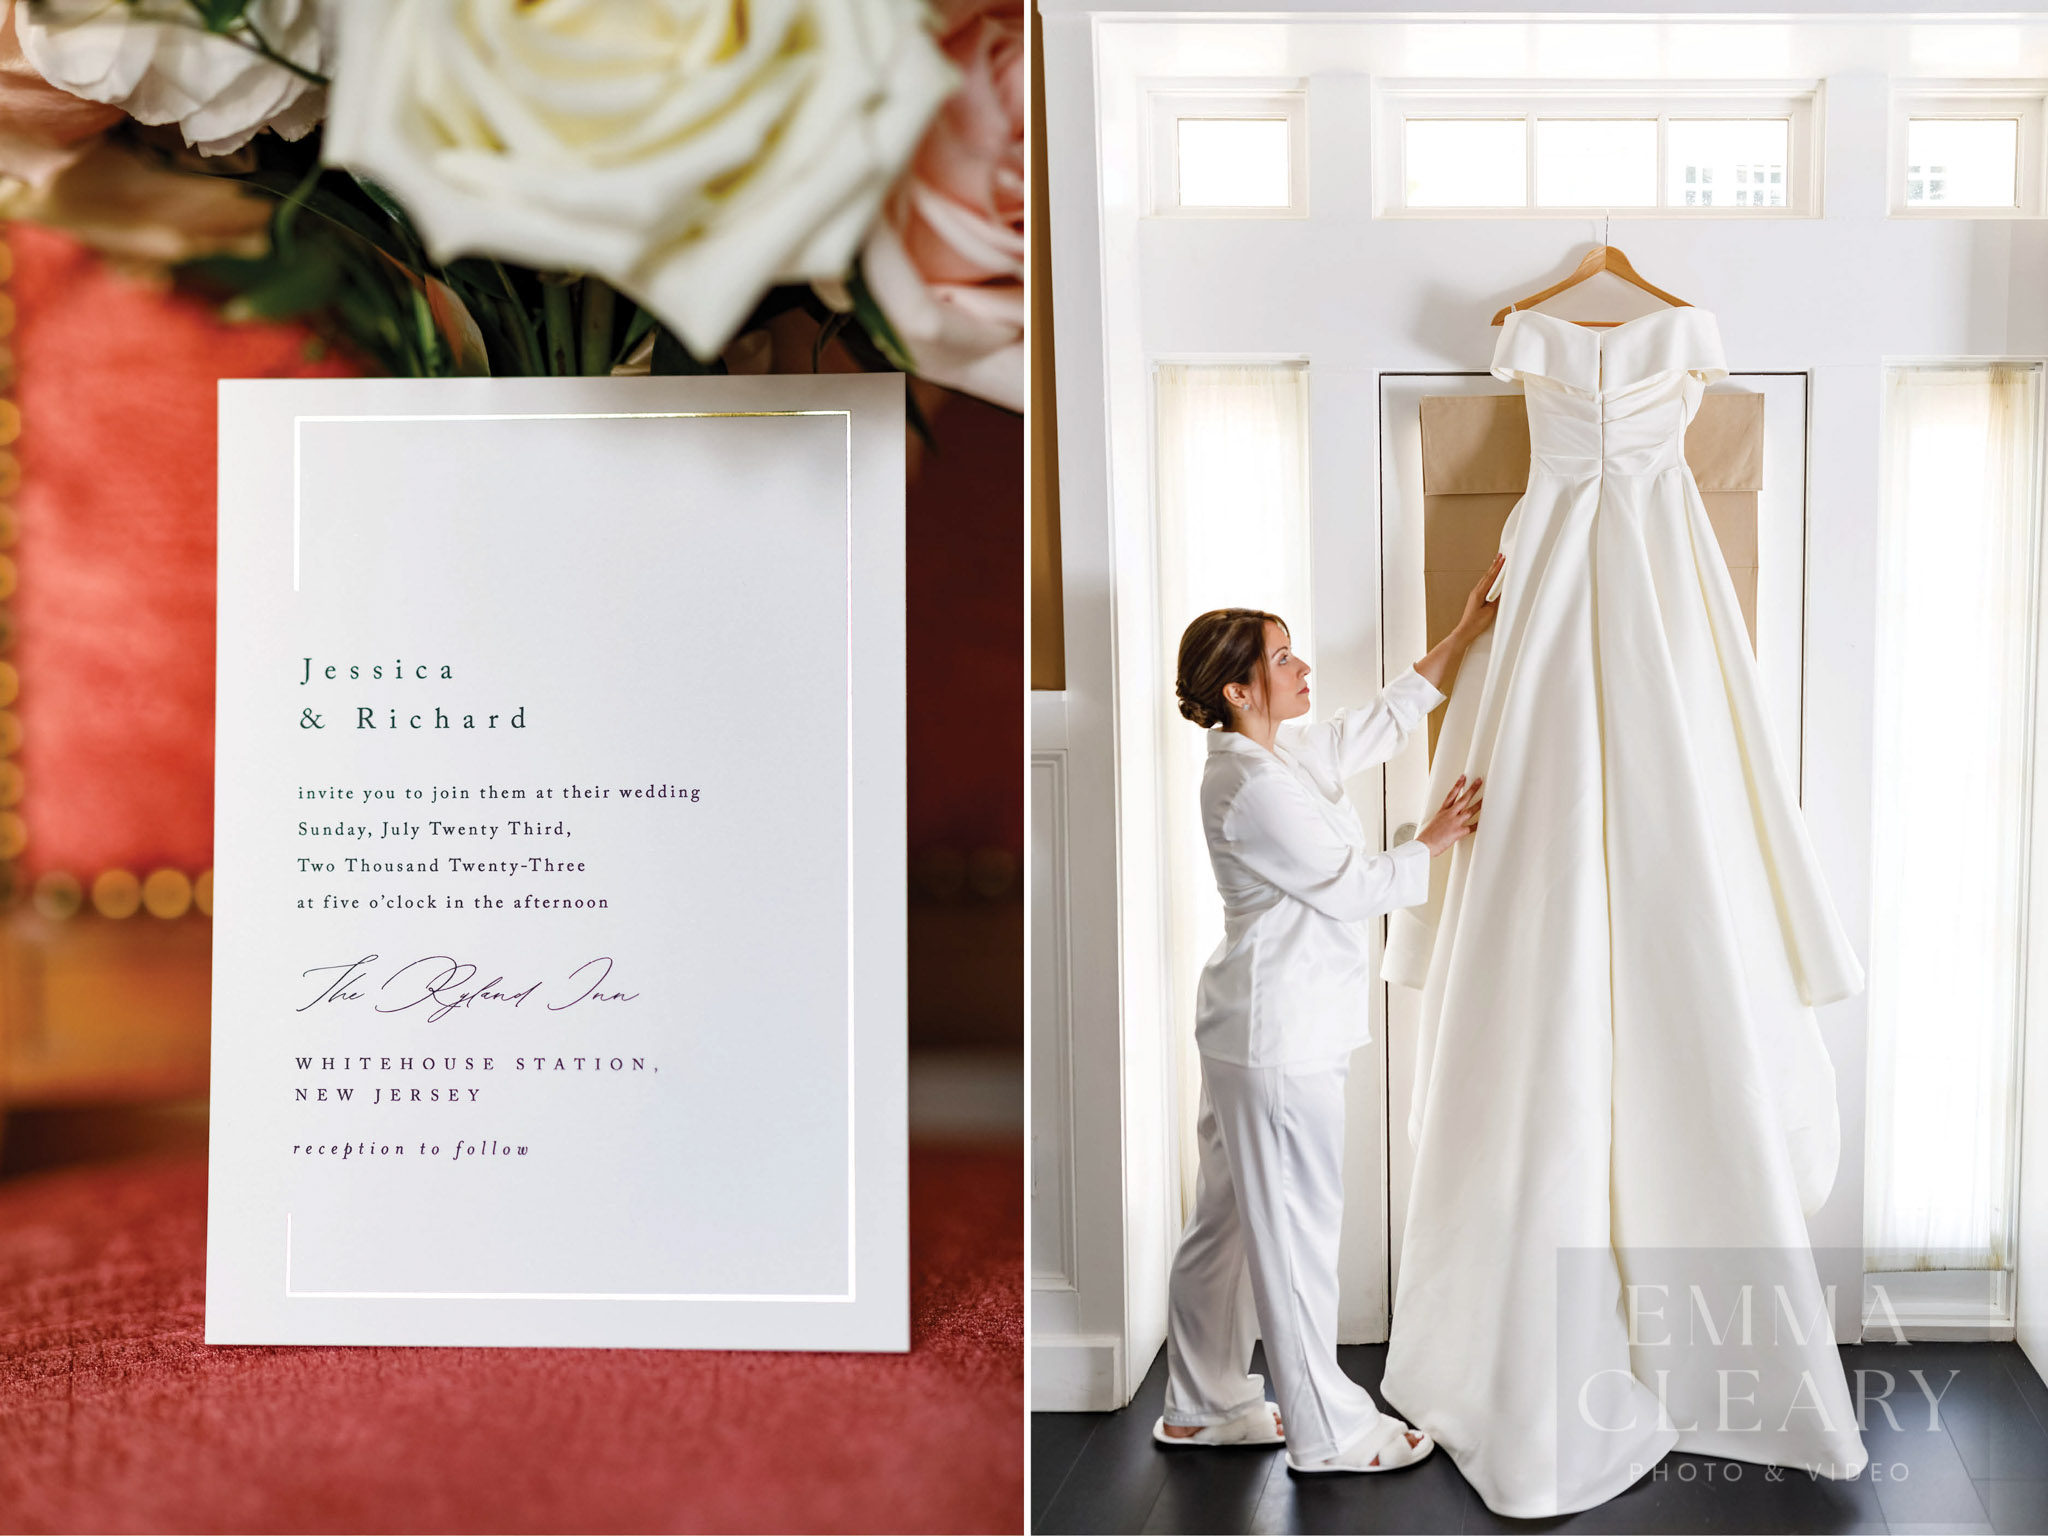 Bride, wedding dress and invitation